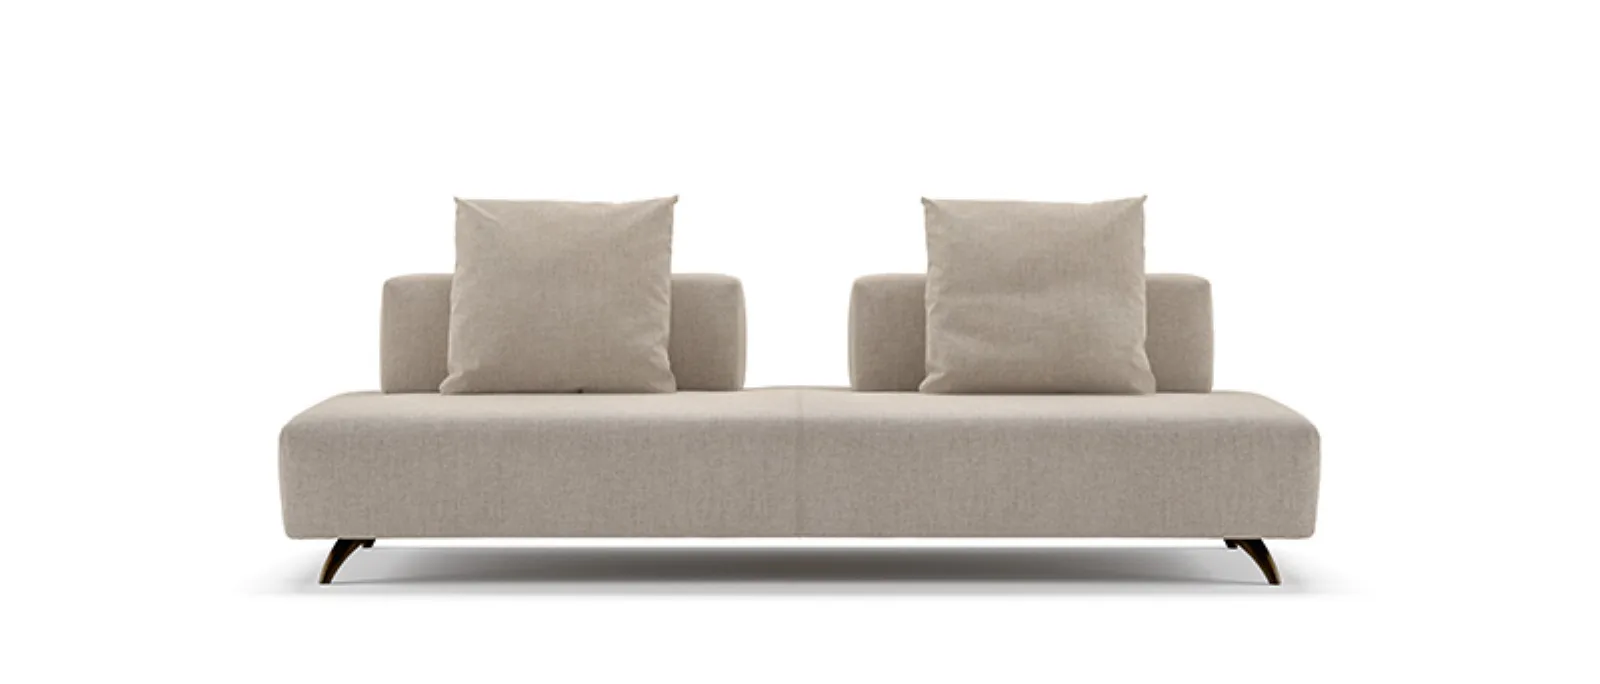 simply minimal design sofa